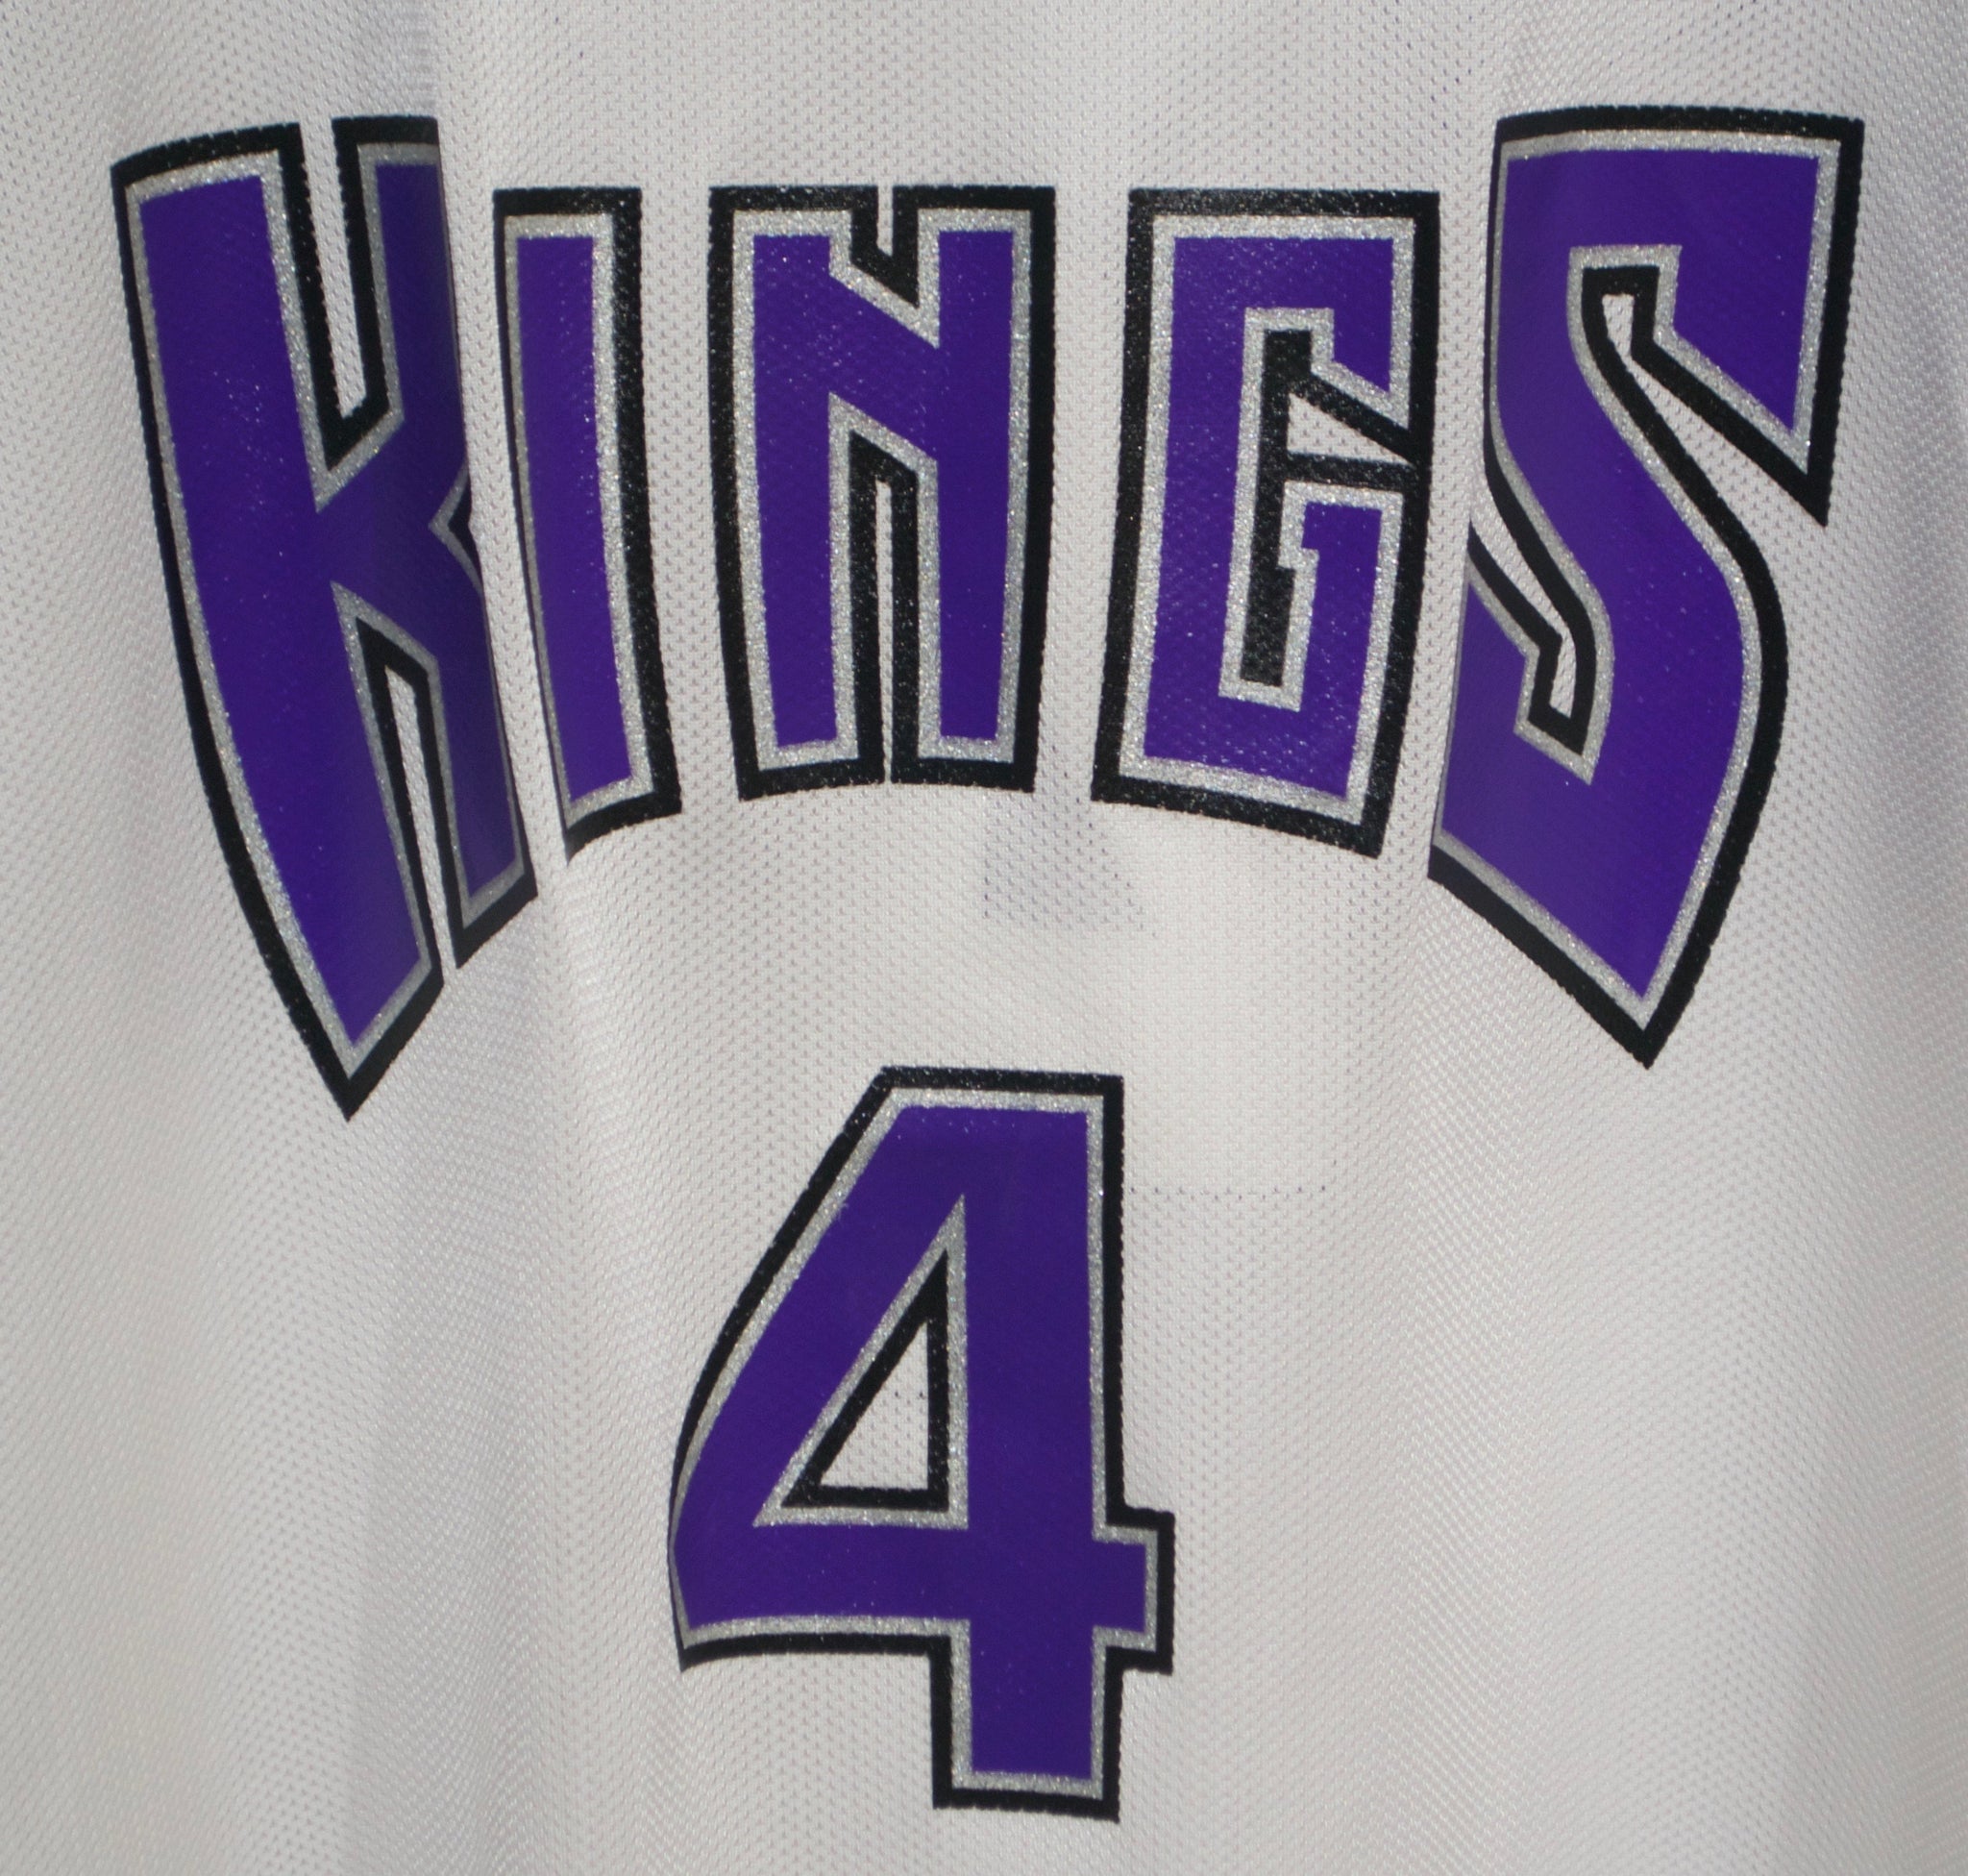 Nike Chris Webber Sacramento Kings Basketball Jersey #4 – Deadstock